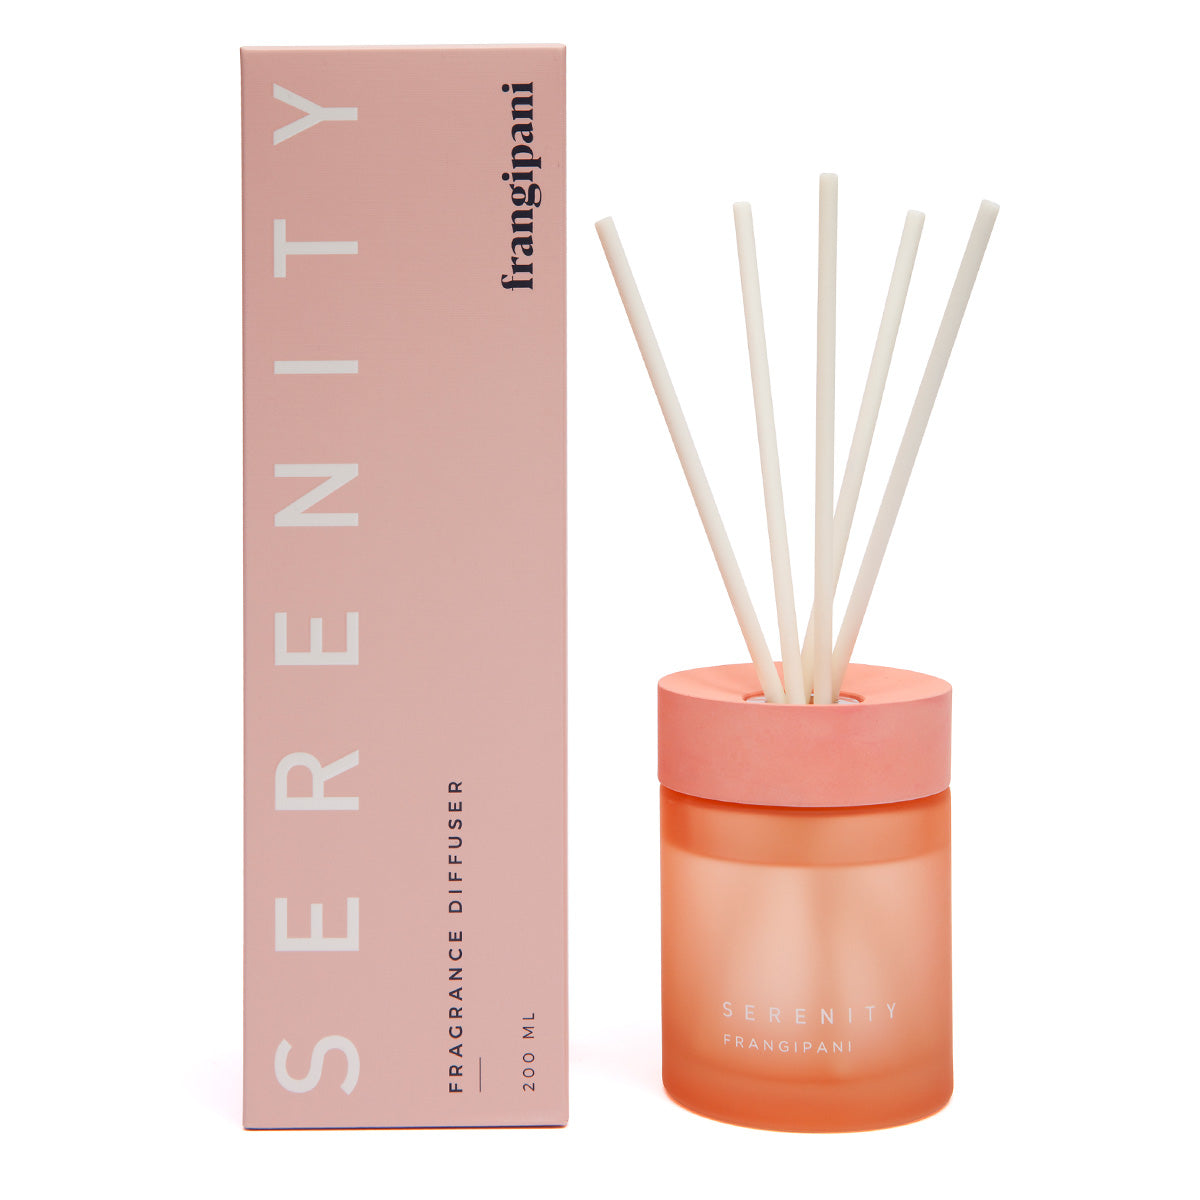 Serenity Coloured Core Diffuser frangipani – Home Fragrance from BJs Furniture Horsham